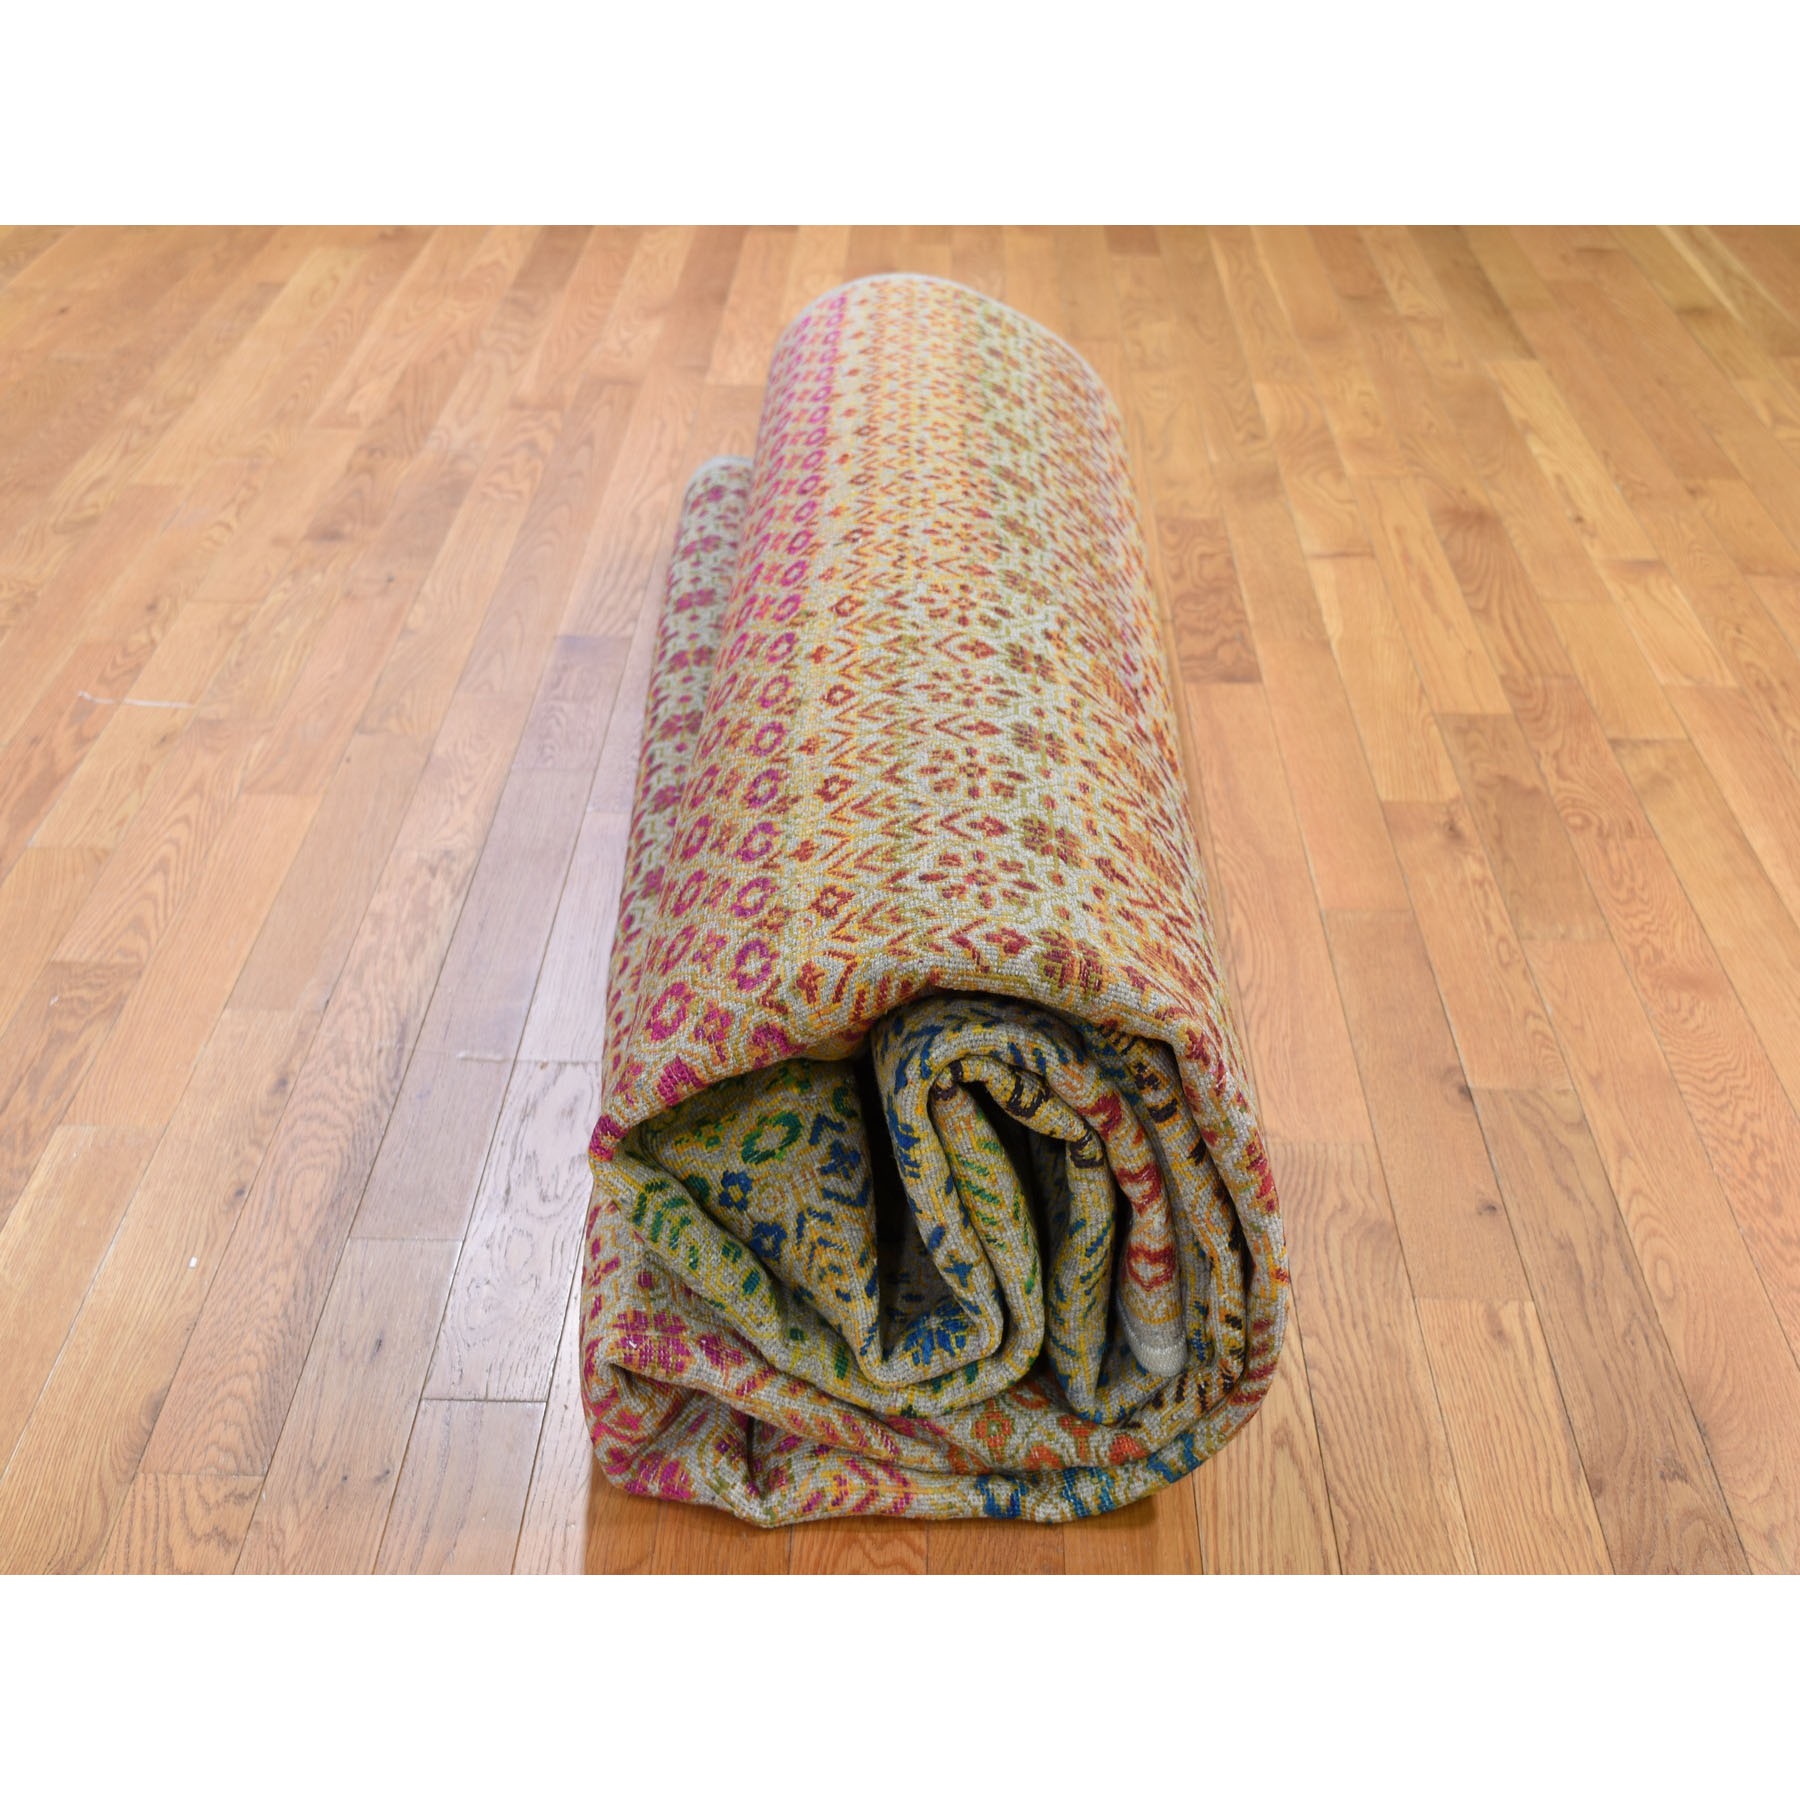 10-x14- Colorful Grass Design Sari Silk Textured Wool Modern Hand Knotted Oriental Rug 